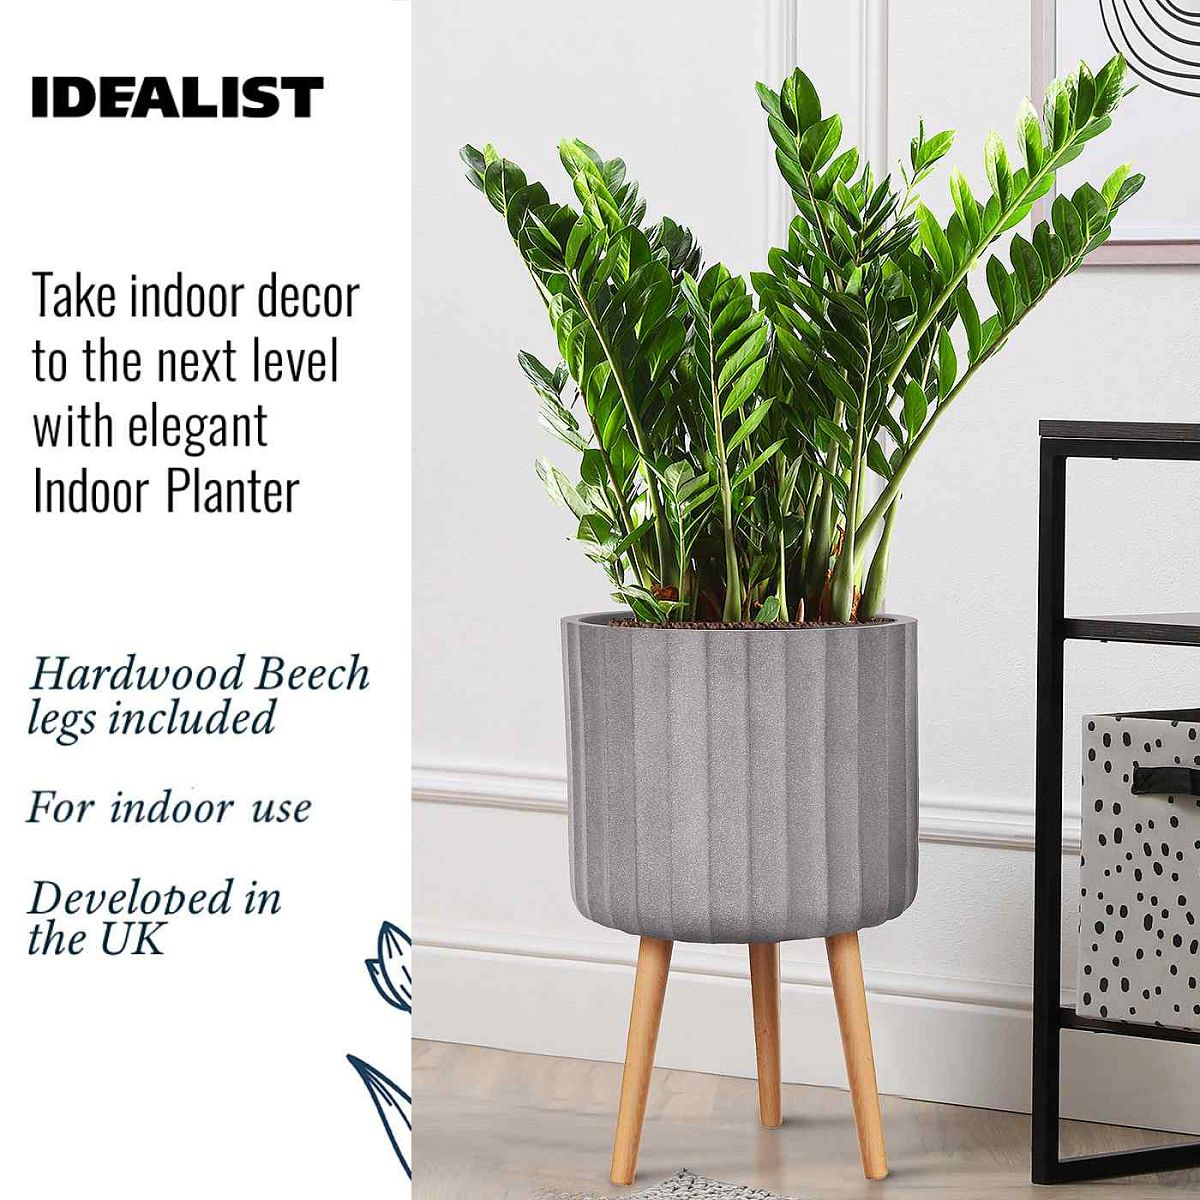 IDEALIST Lite Modern Ribbed Cylinder Planter on Legs, Round Pot Plant Stand Indoor